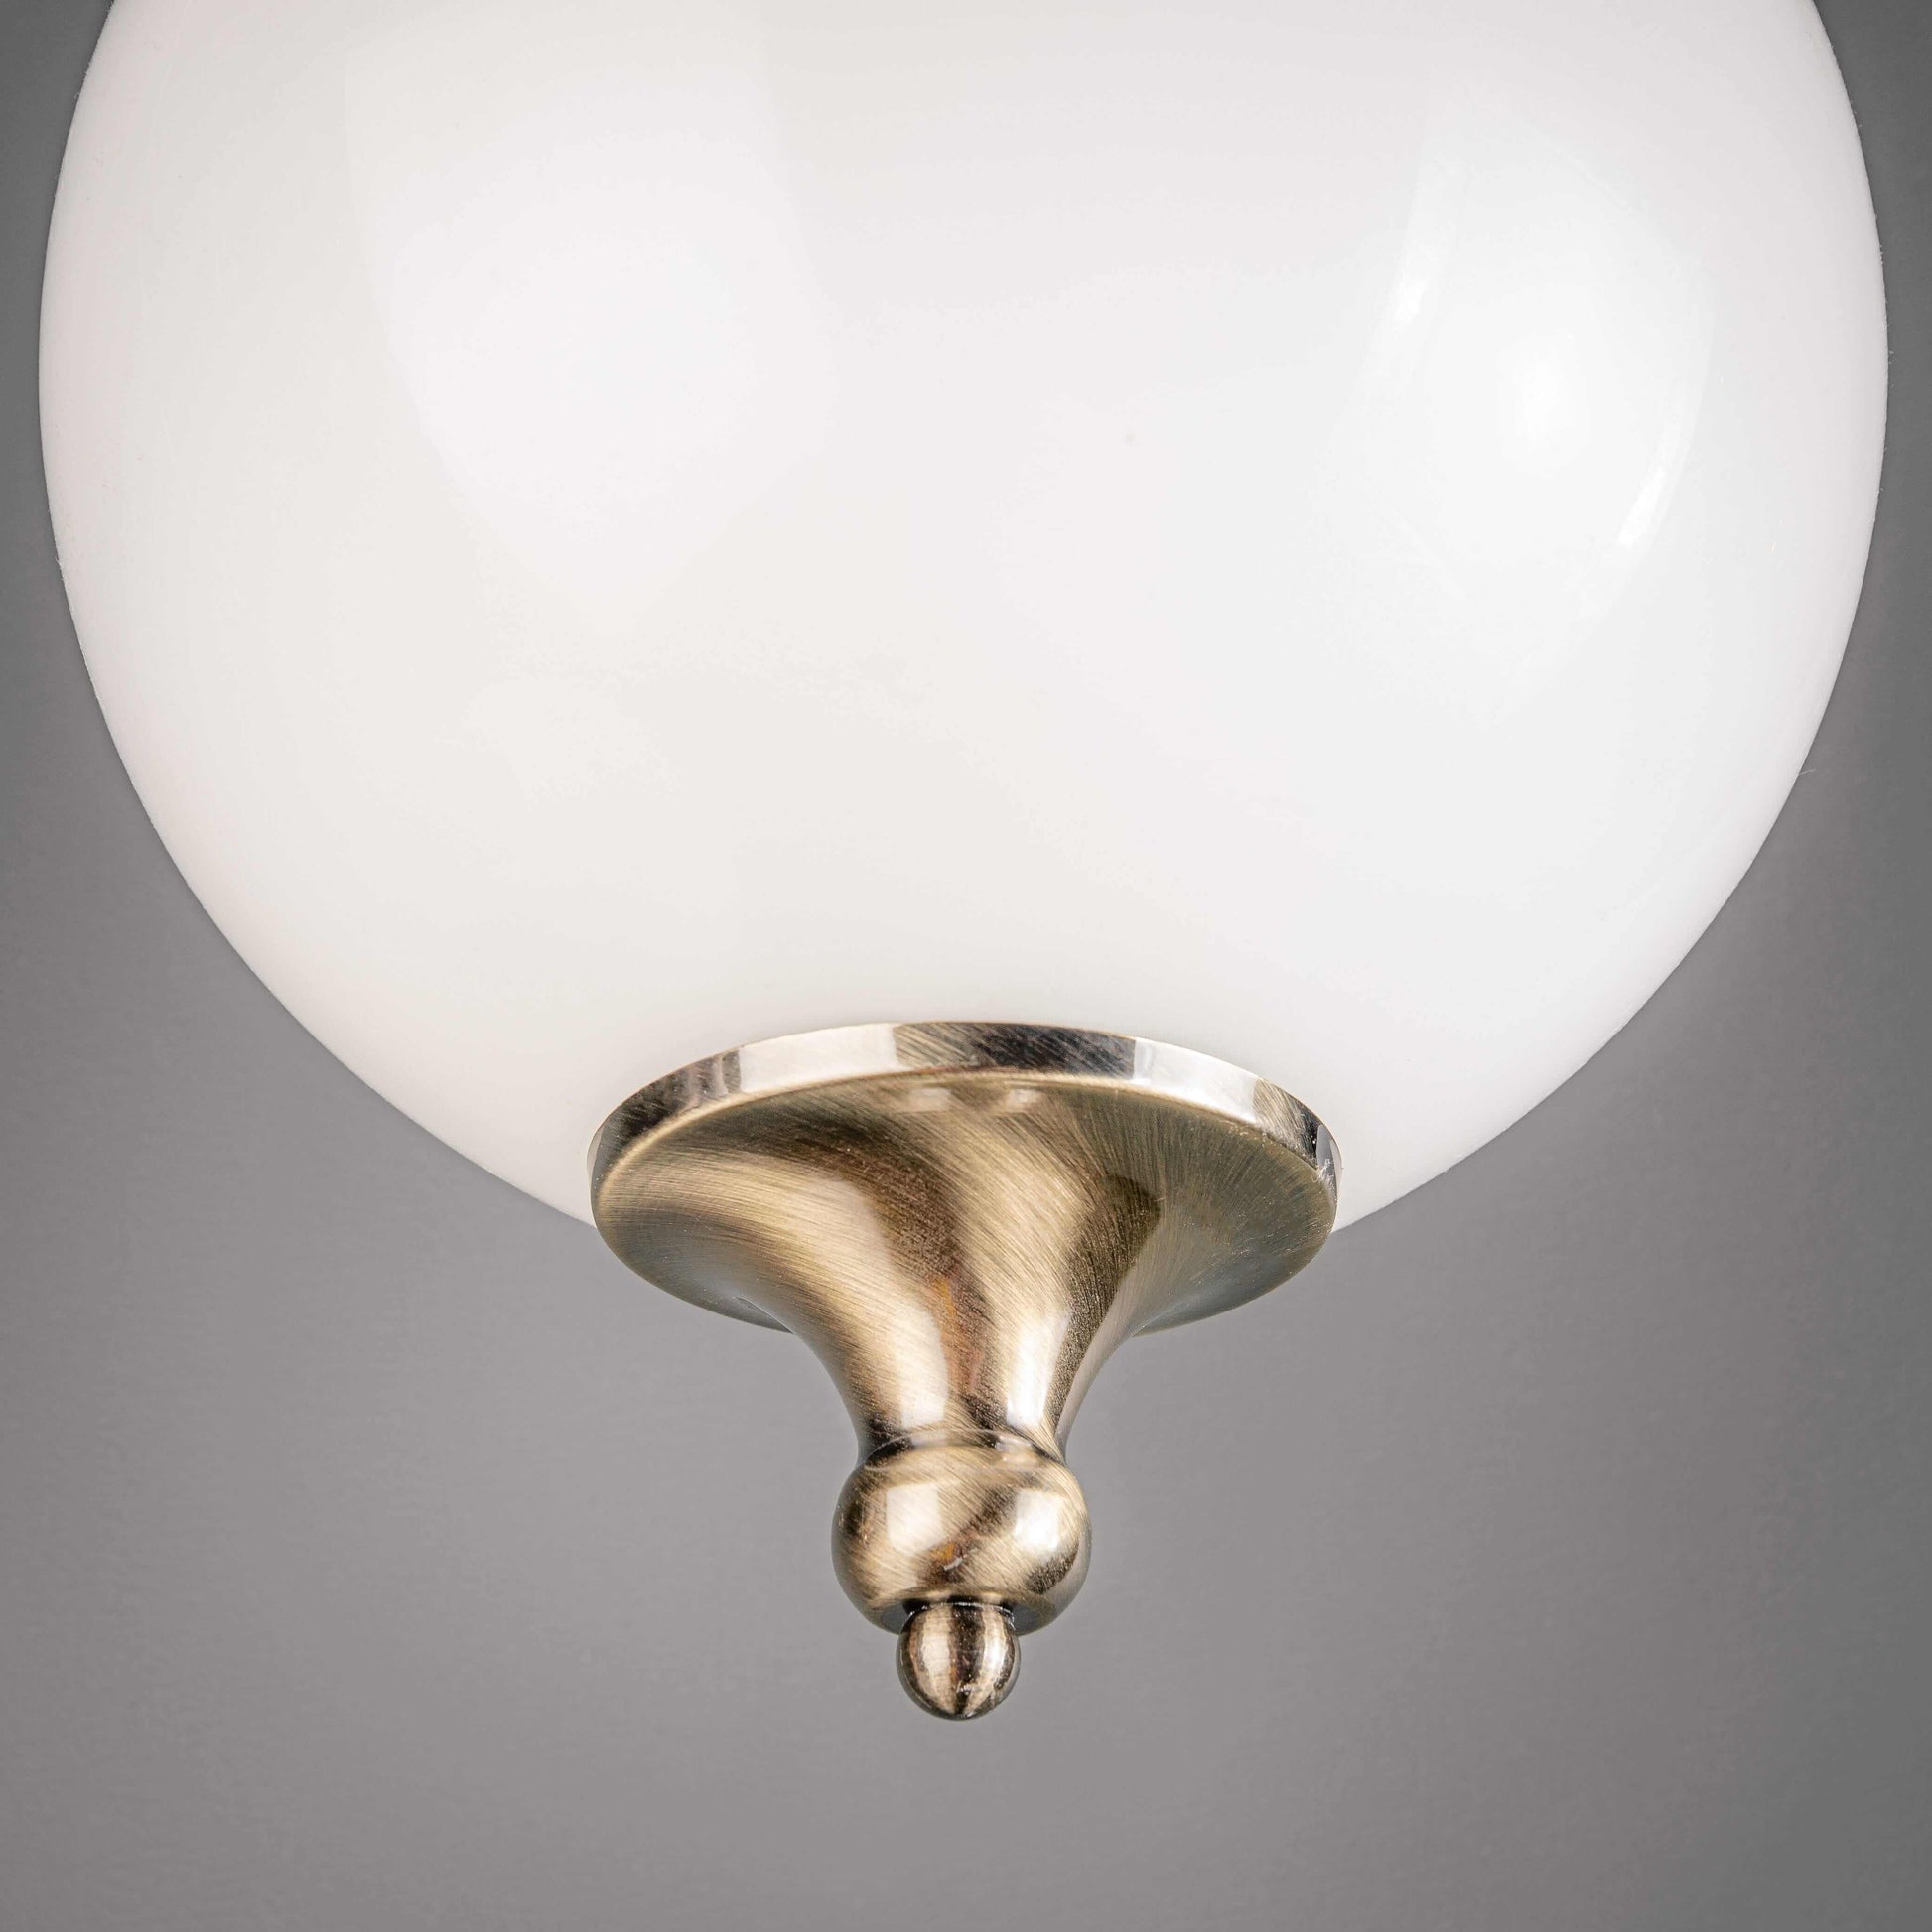 Lights  -  Antique Brass Pendant Ceiling Light  -  50113630